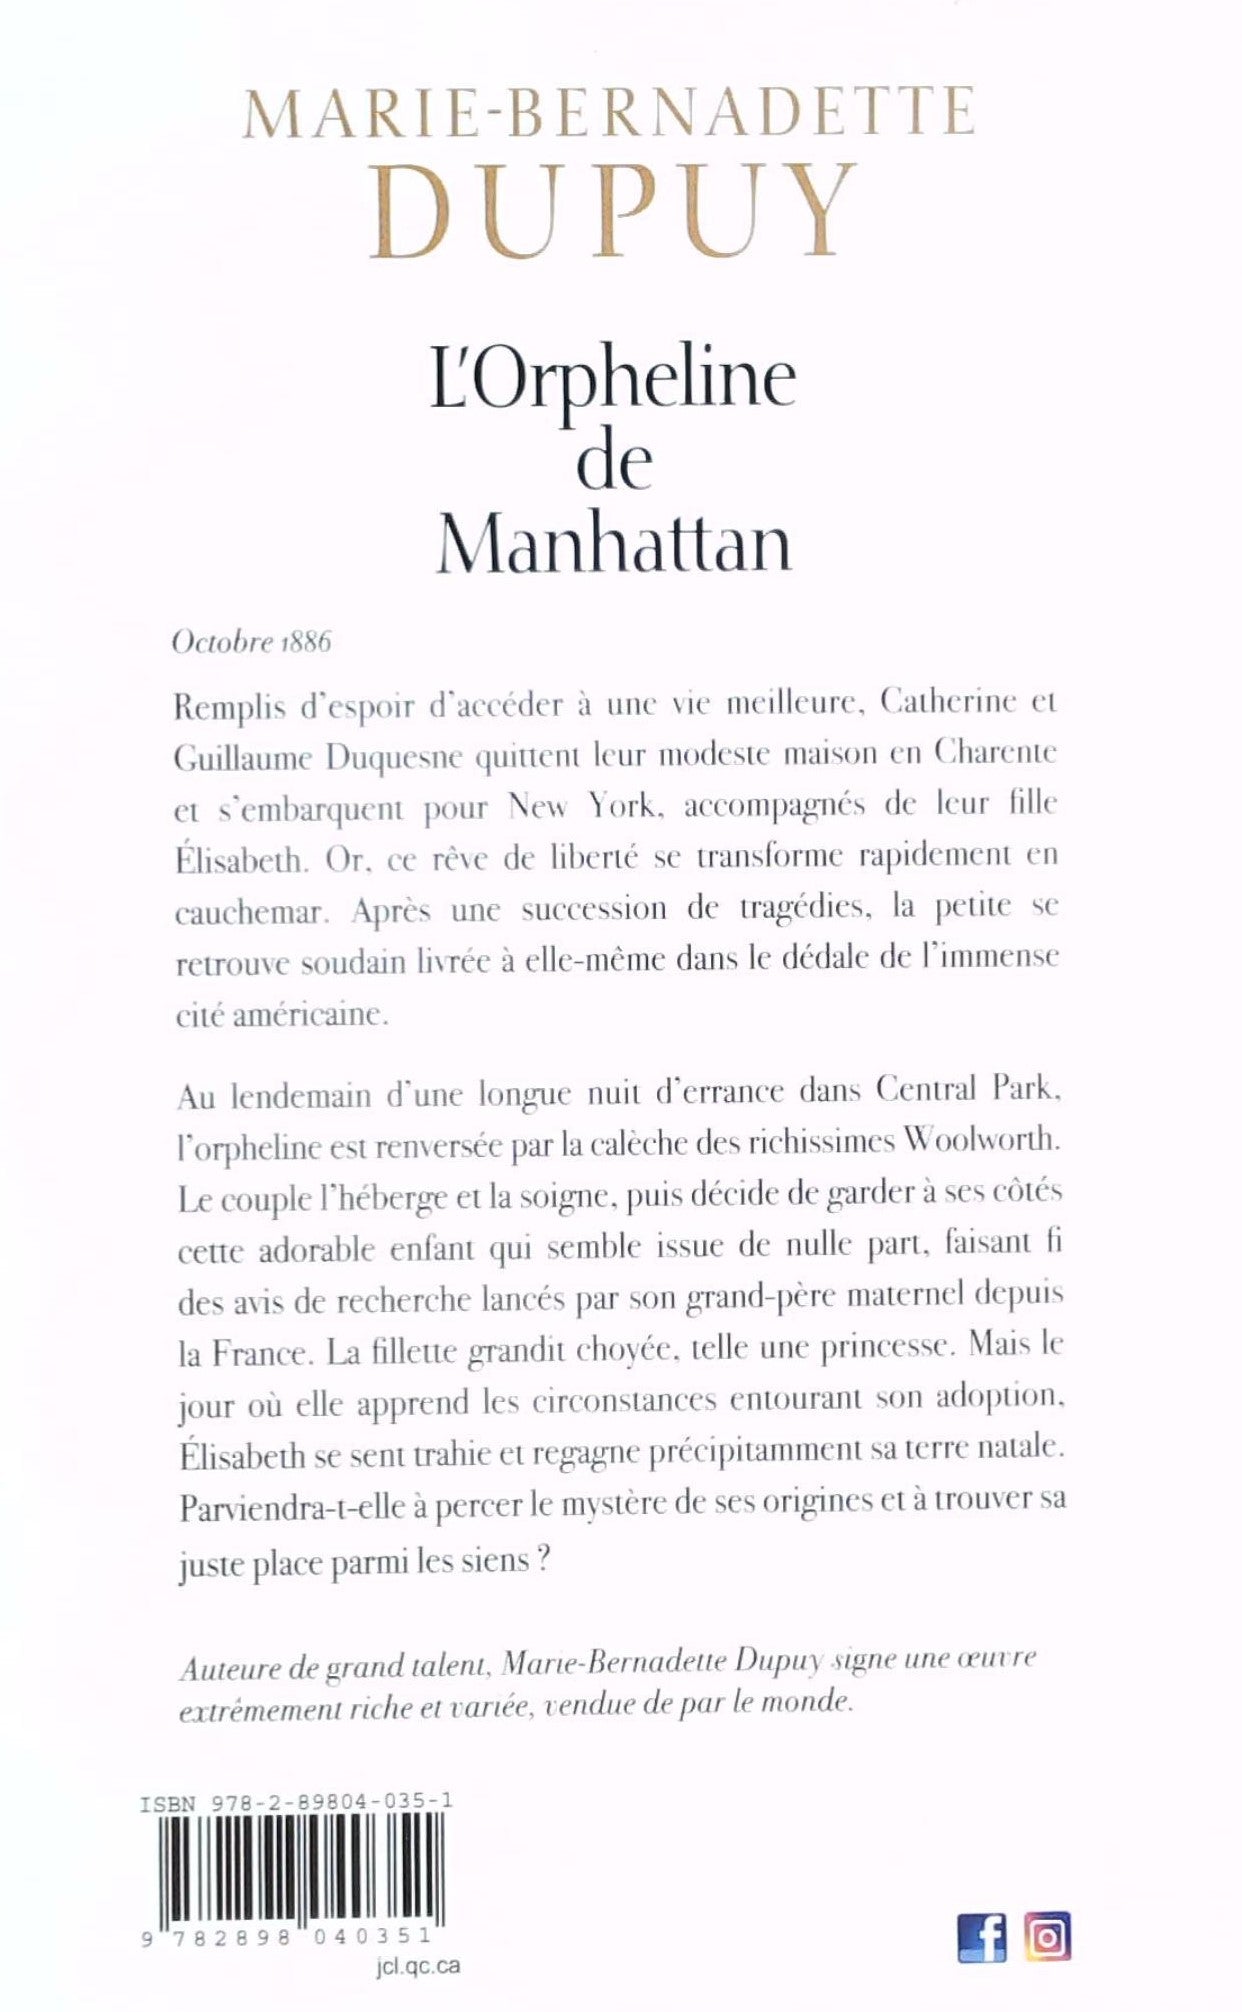 L'orpheline de Manhattan # 1 (Marie-Bernadette Dupuy)